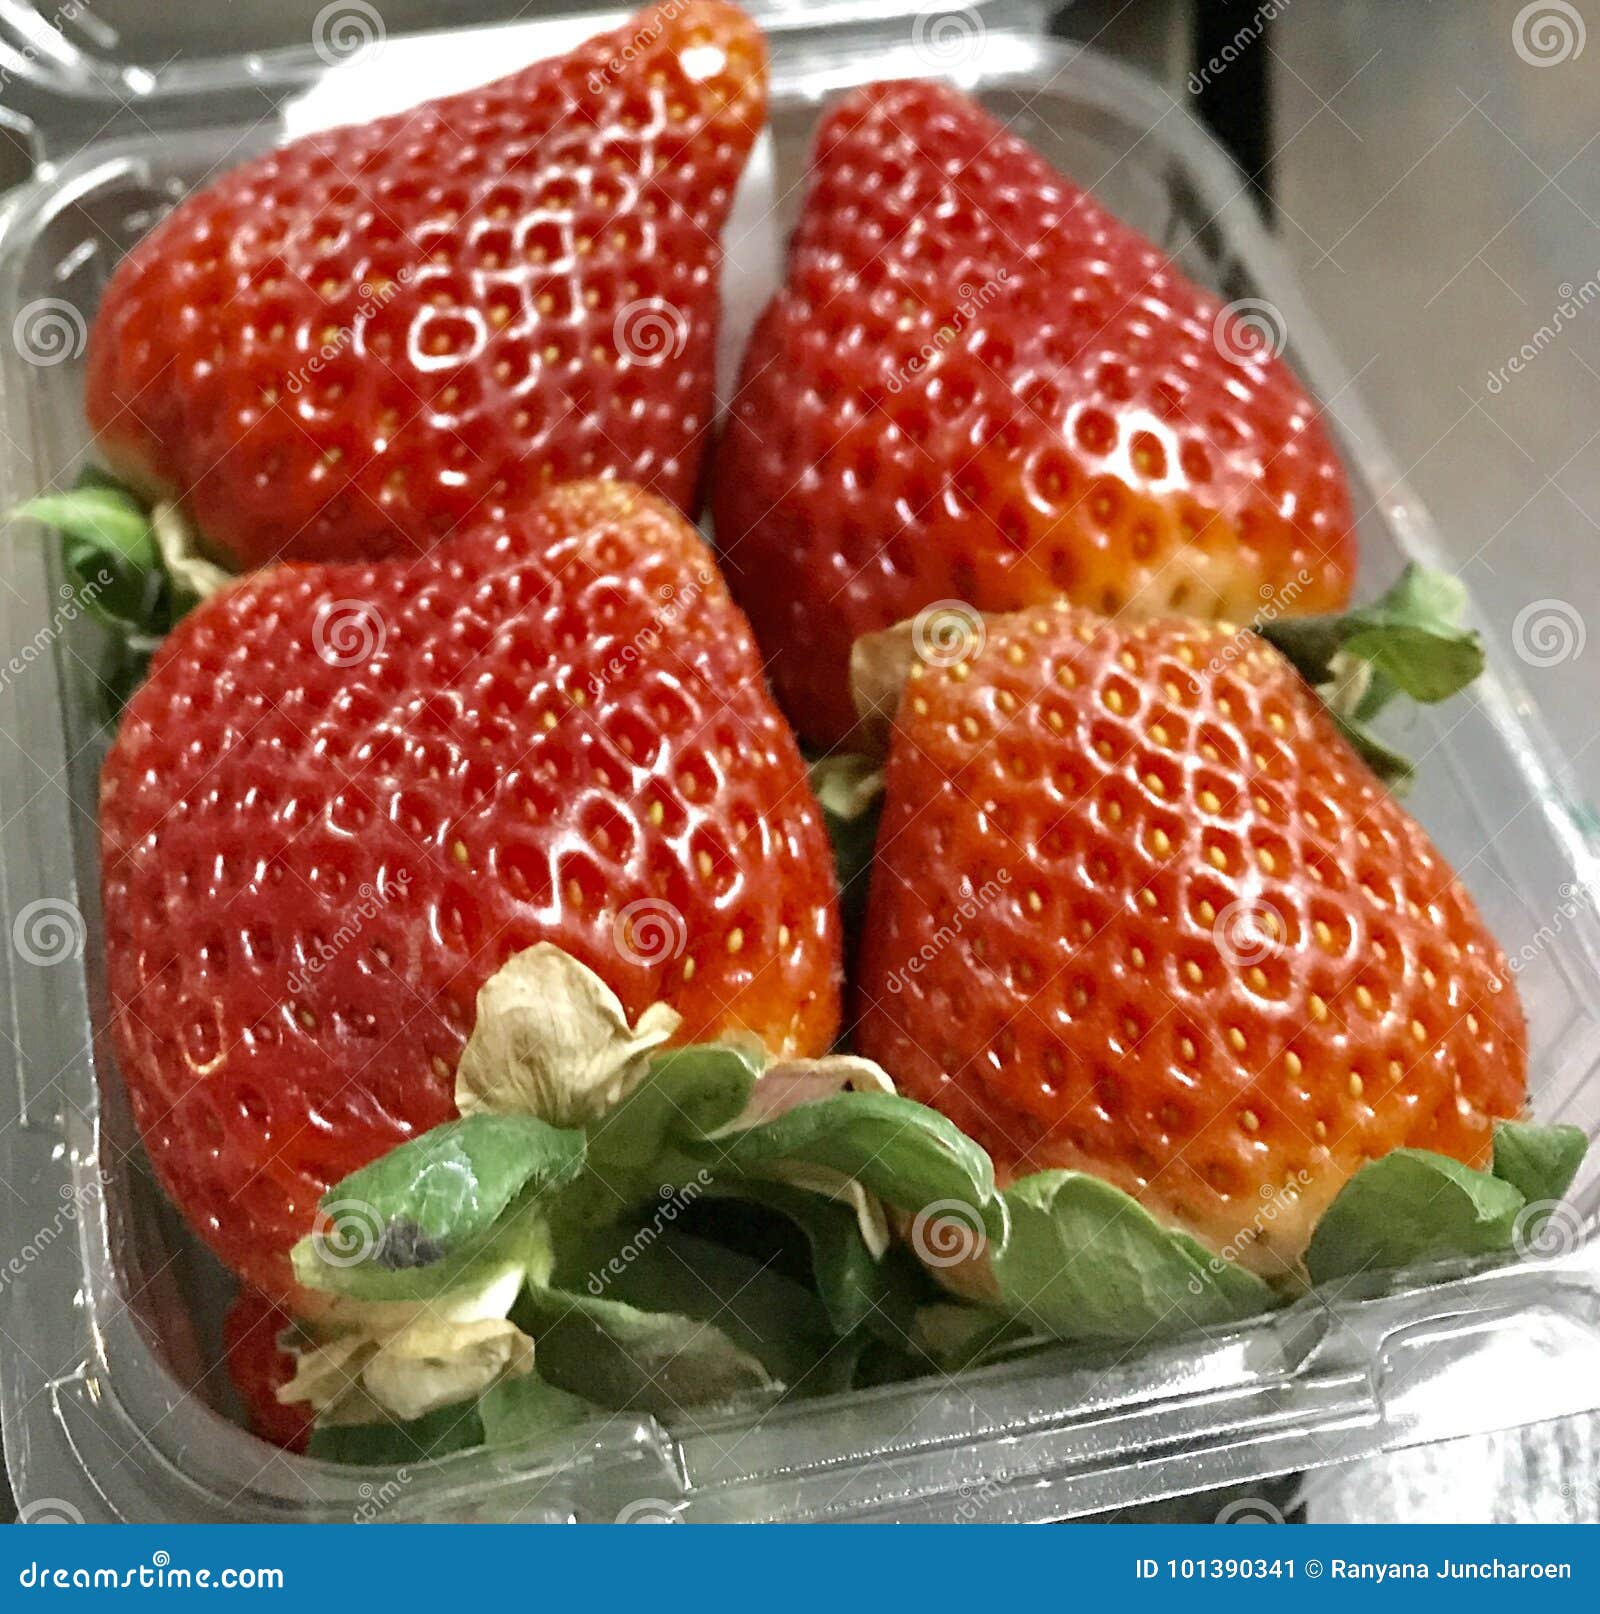 Big strawberry stock image. Image of fresh, feel, refreshment - 101390341